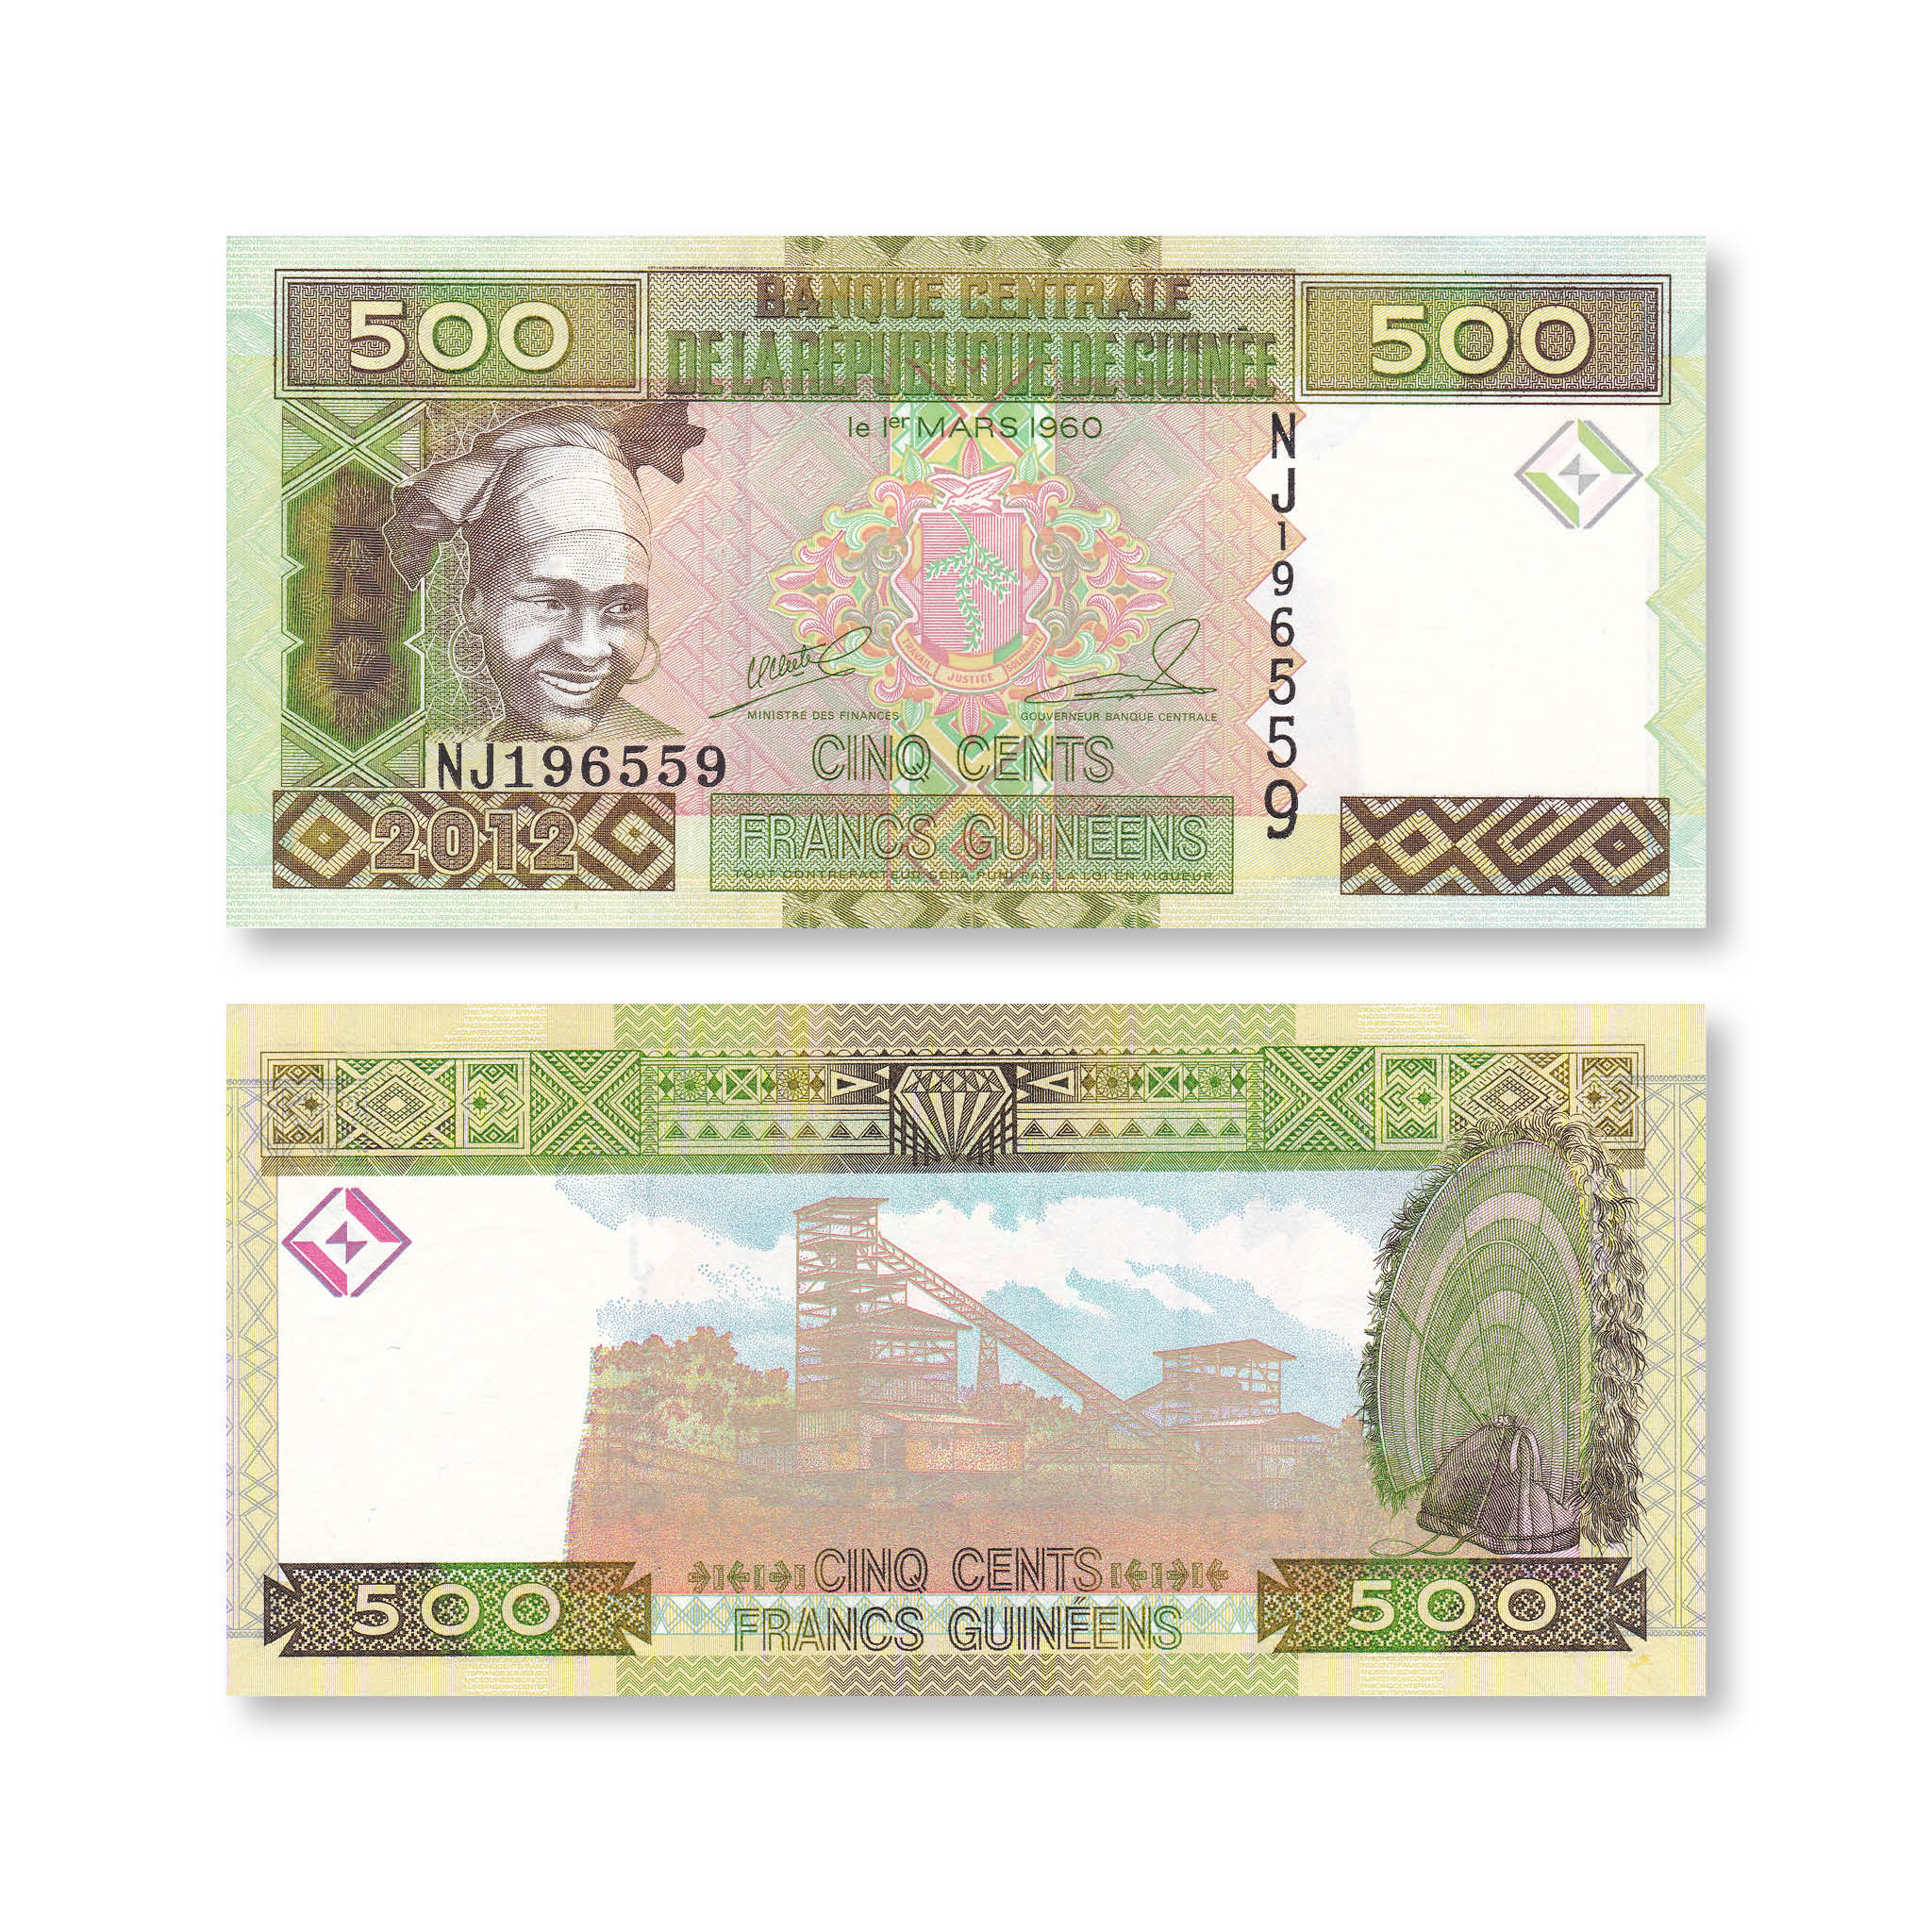 Guinea 500 Francs, 2012, B328b, P39b, UNC - Robert's World Money - World Banknotes